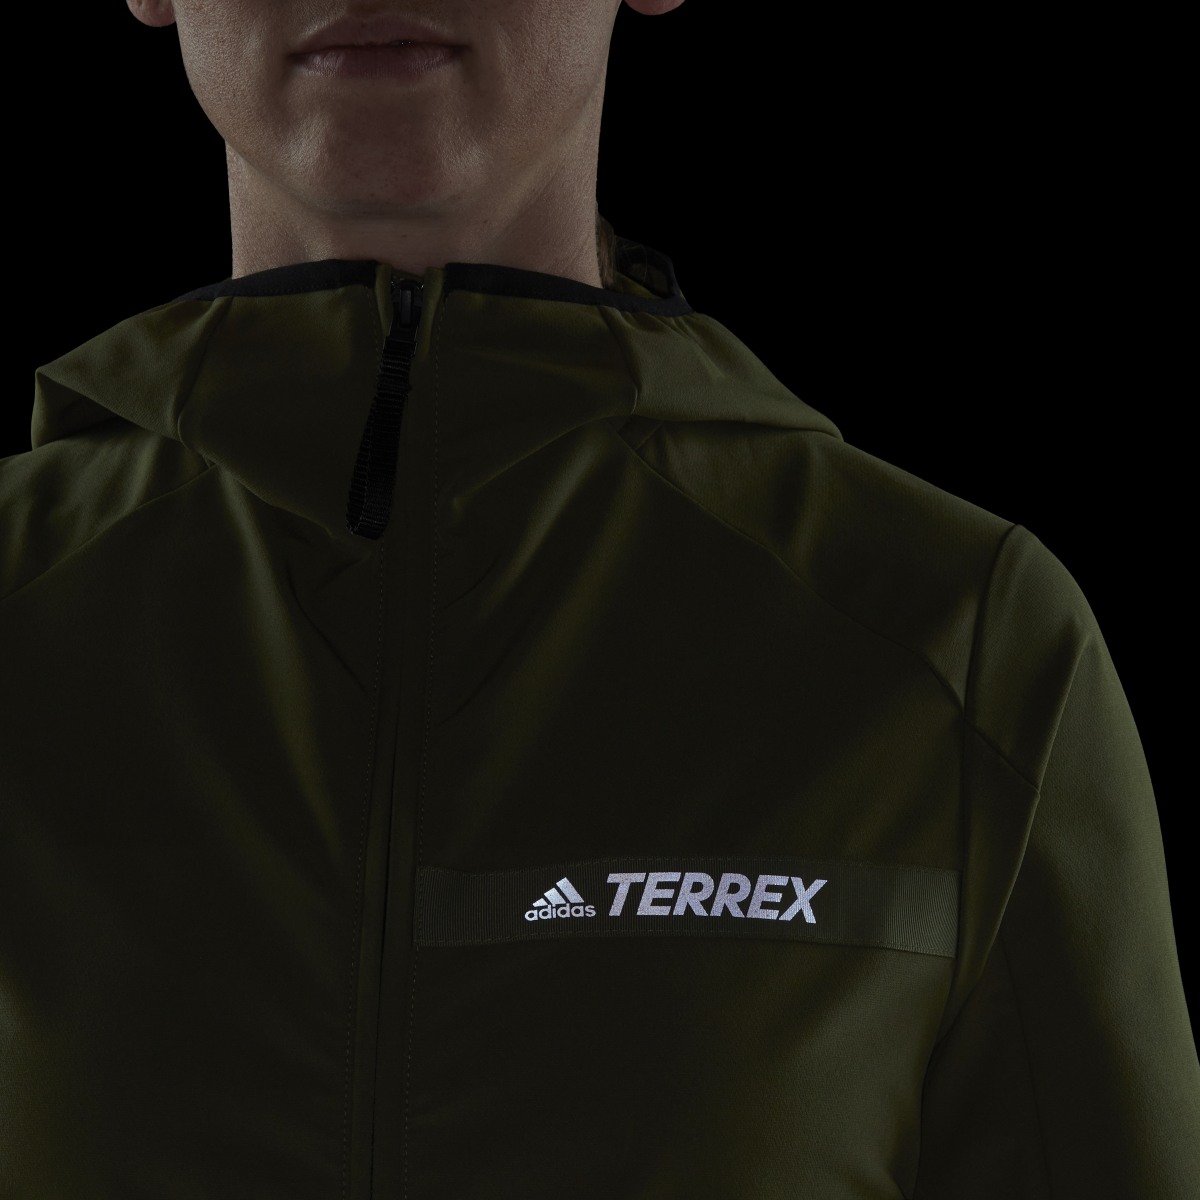 Adidas Terrex Multi Soft Shell Jacket. 7